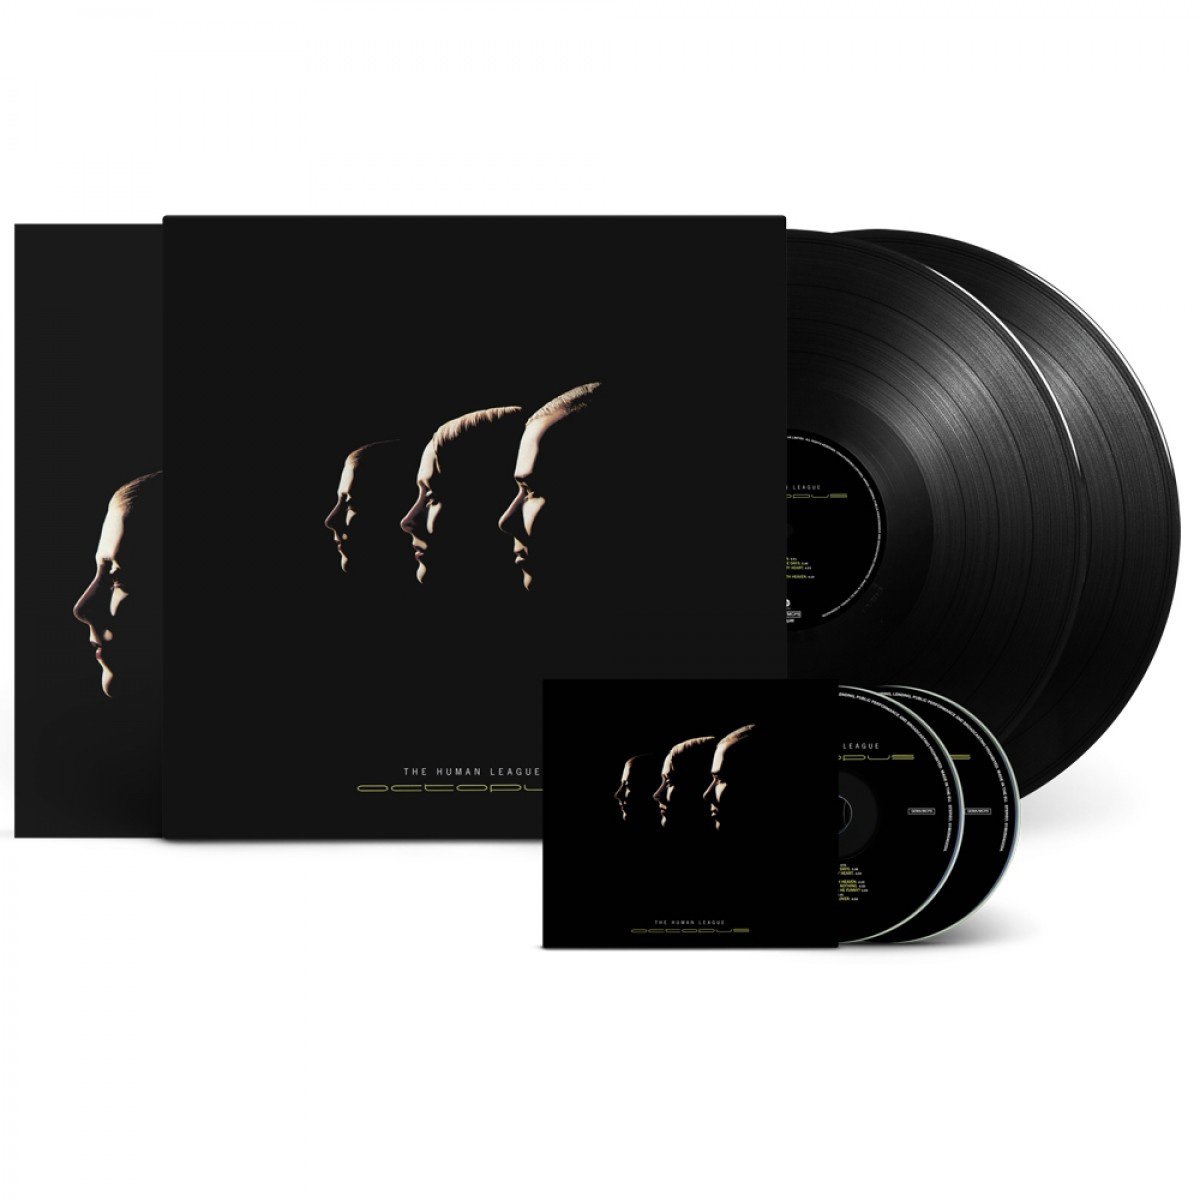 THE HUMAN LEAGUE - Announce reissue of their seventh studio album ‘Octopus’ 1